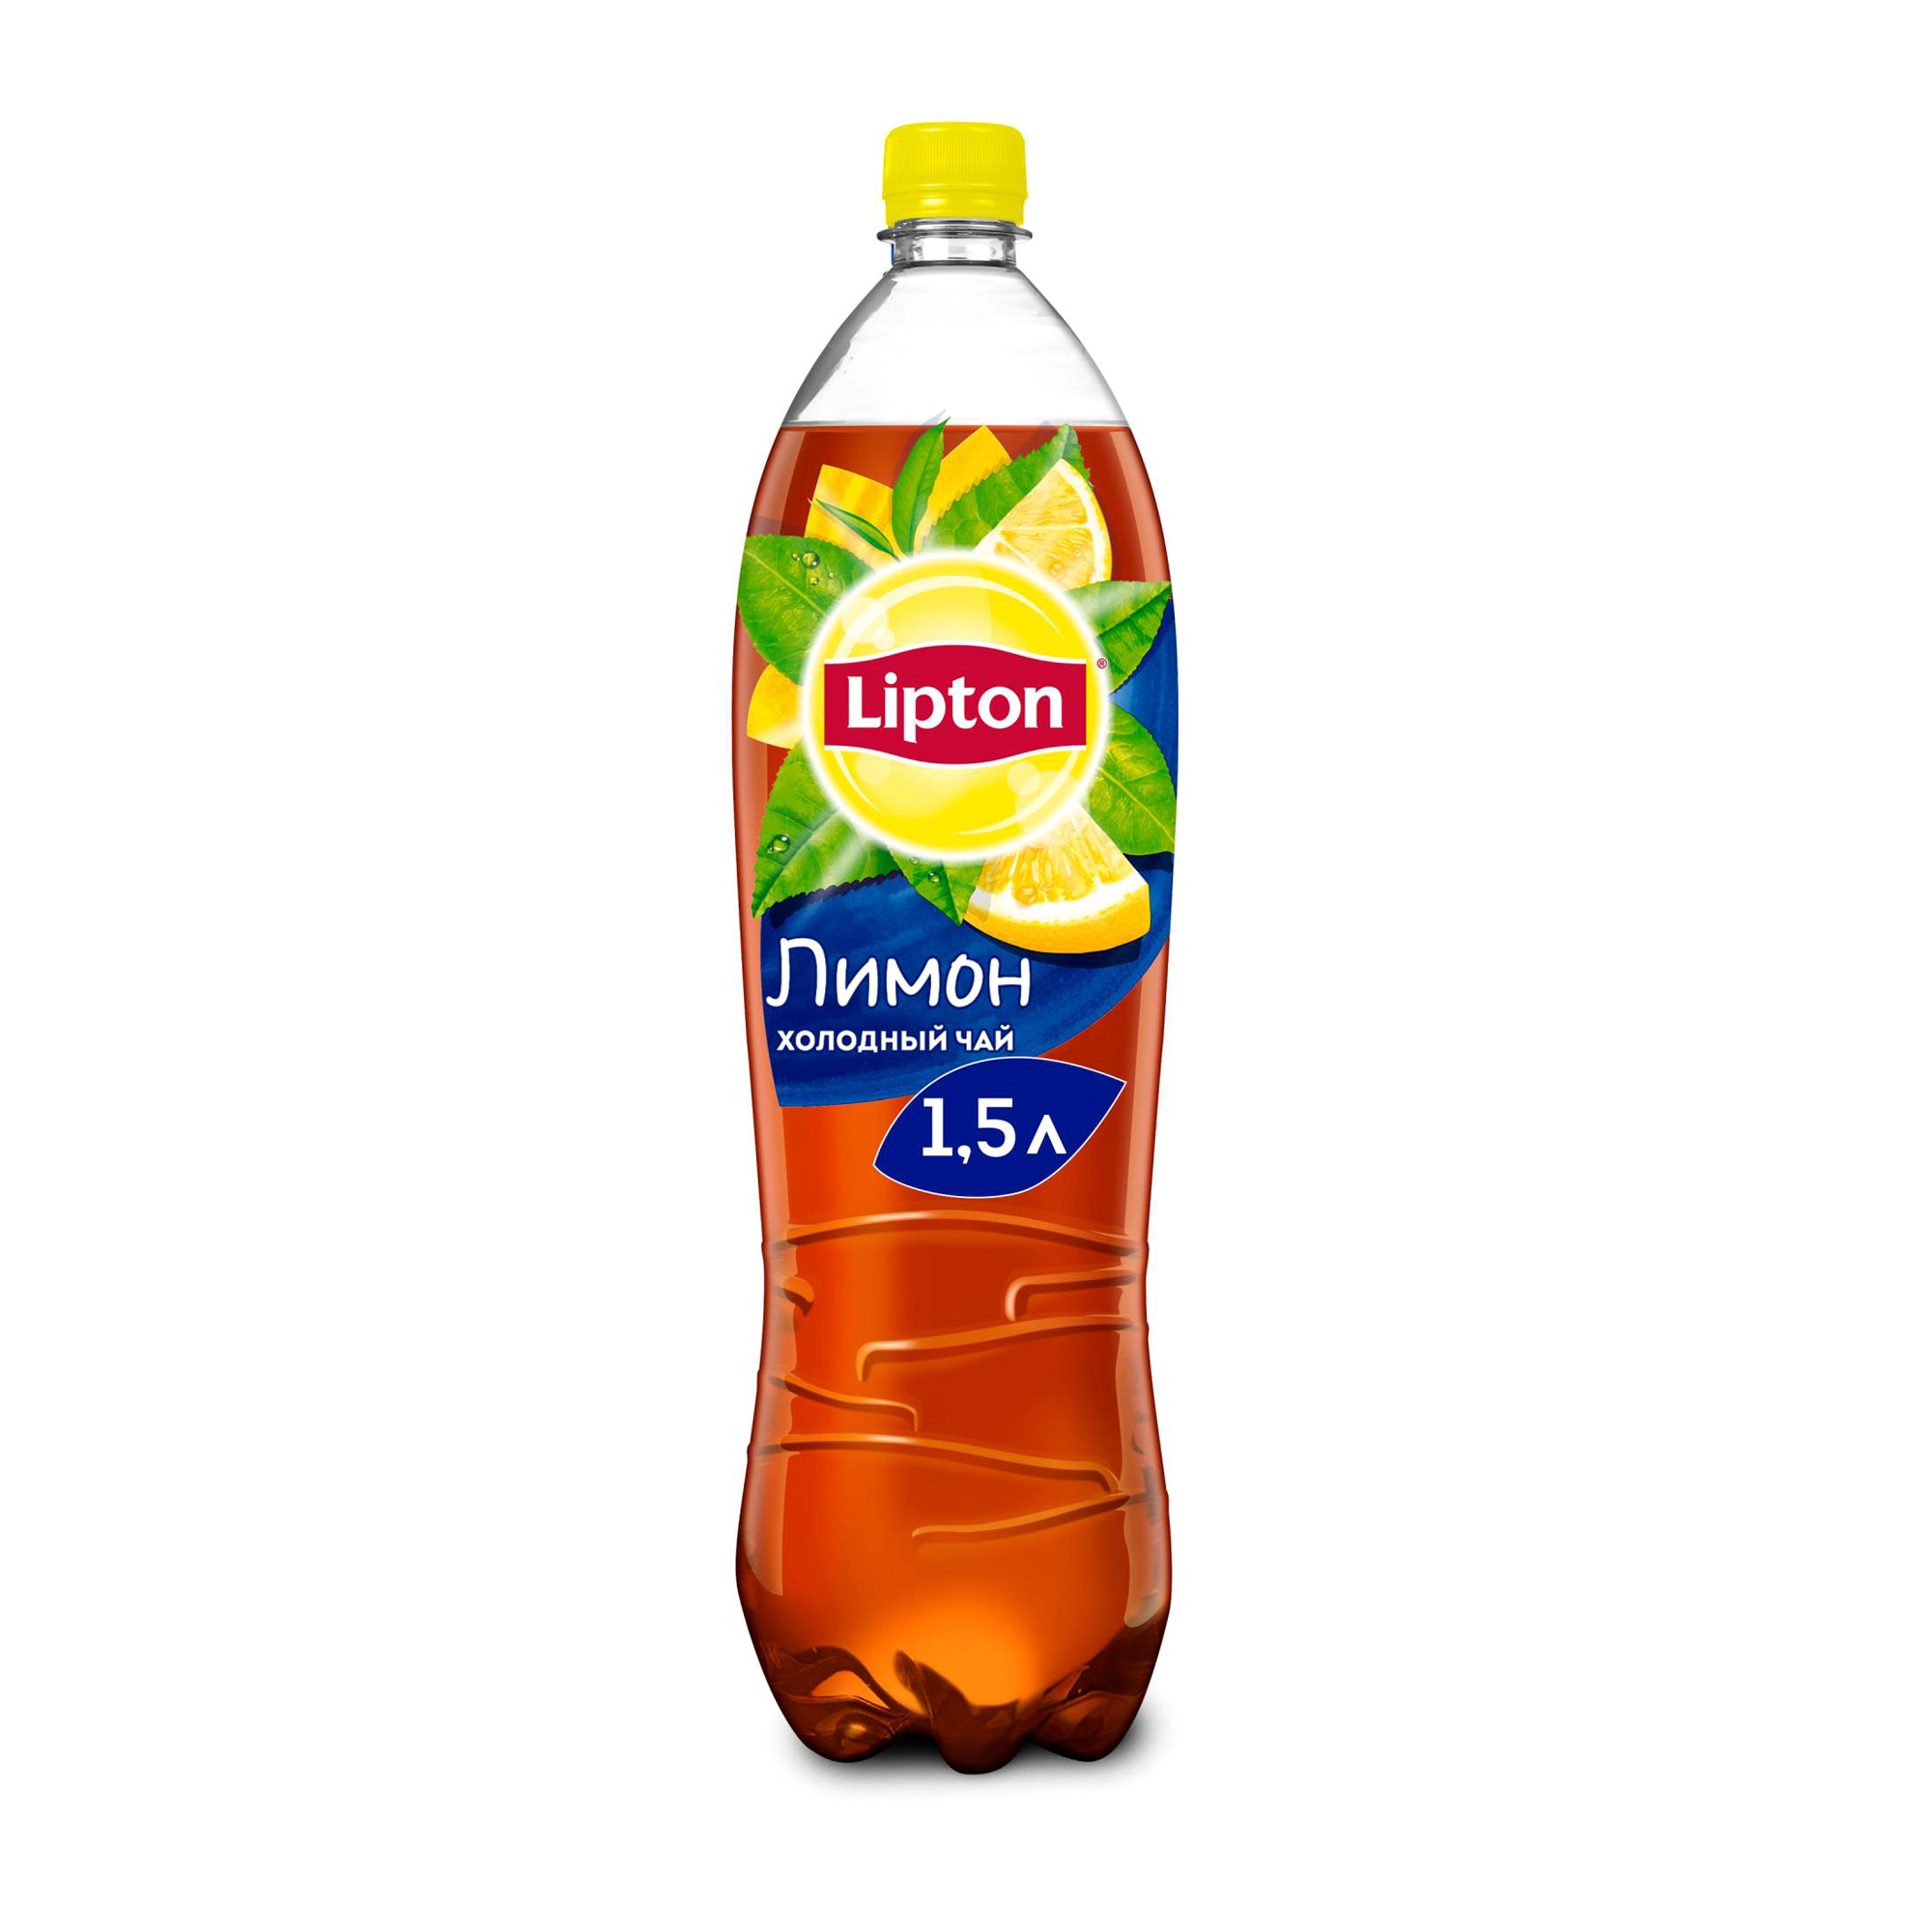 Холодный чай Lipton Черный Лимон 1,5 л lipton ice tea липтон лимон 1 5 литра пэт 6 шт в уп